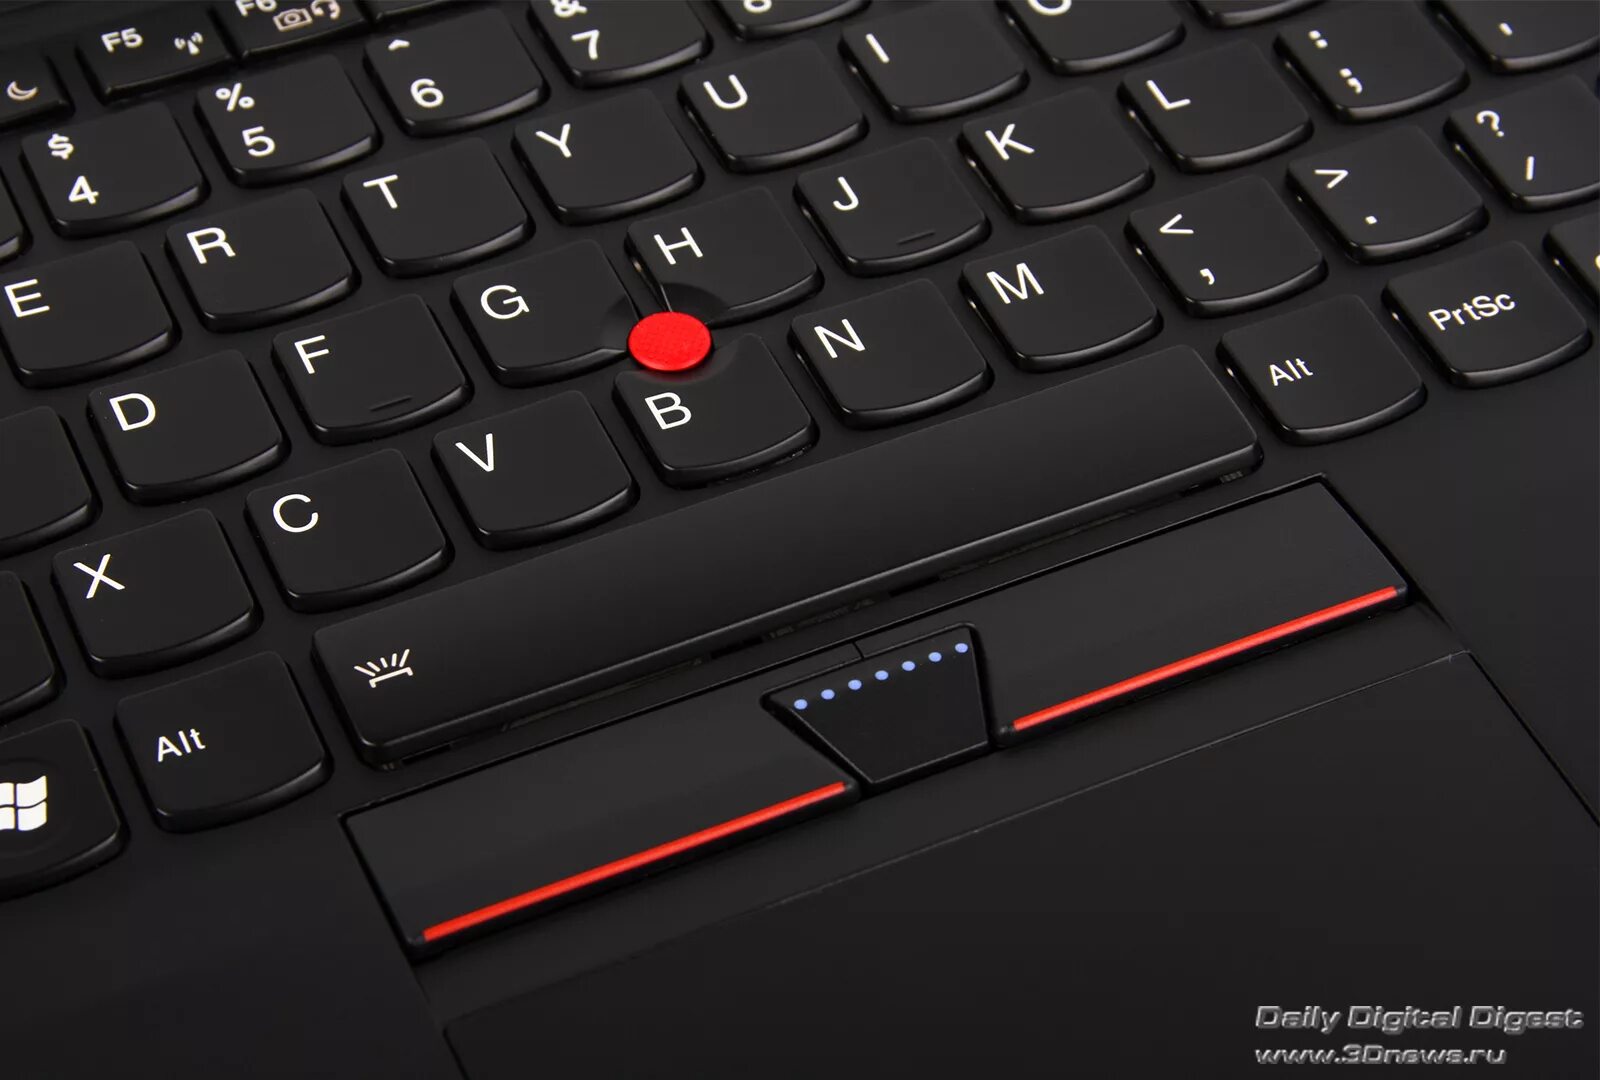 Включить подсветку 10. THINKPAD TRACKPOINT. THINKPAD t580. Ноутбук с красной точкой на клавиатуре. Трекпоинт первый.